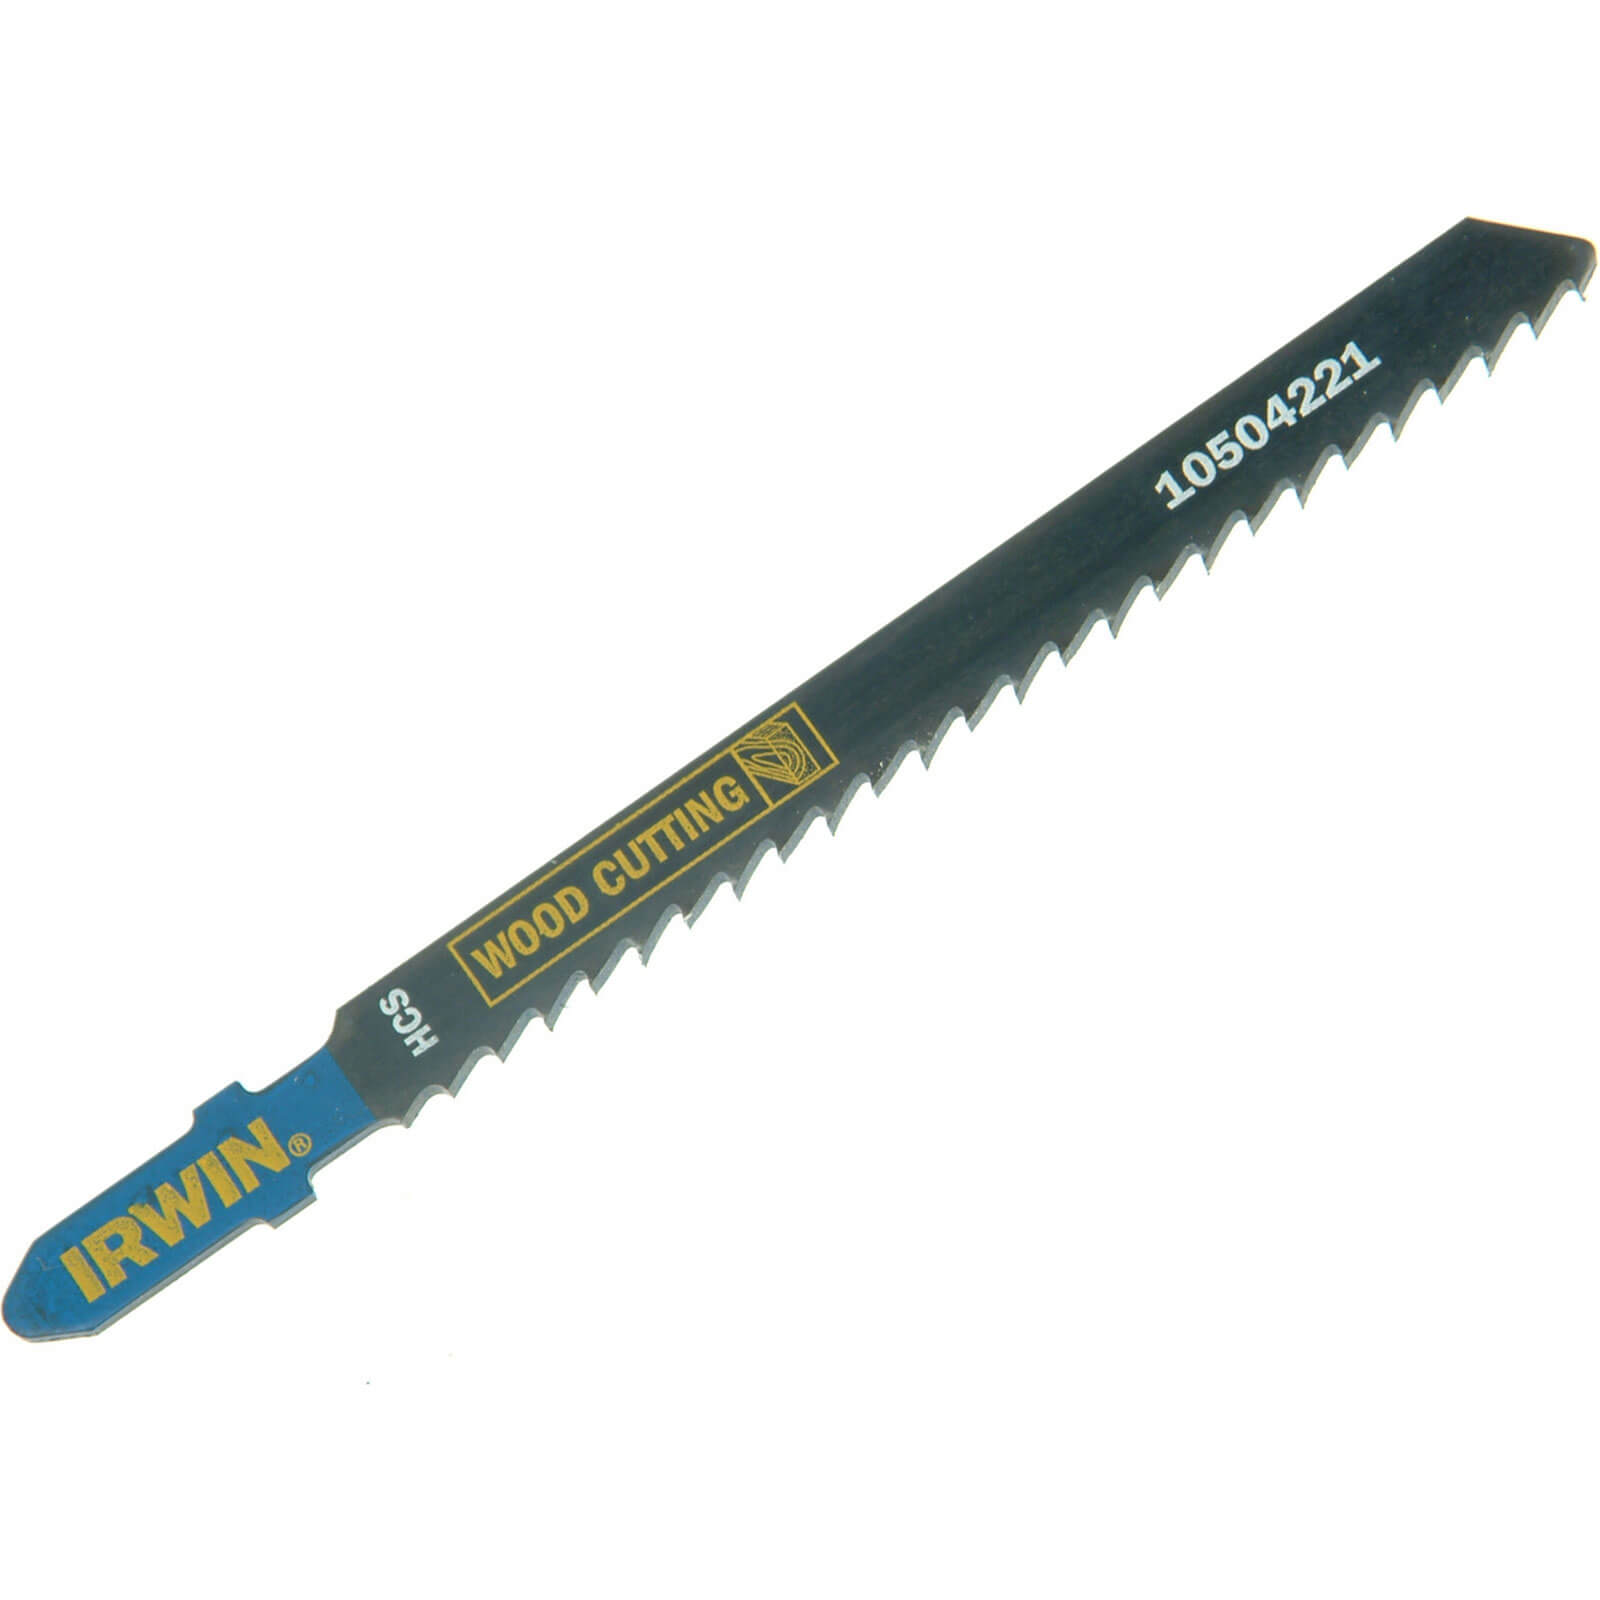 Photos - Power Tool Accessory IRWIN T101B T Shank Wood Cutting Jigsaw Blades Pack of 5 IRW10504219 